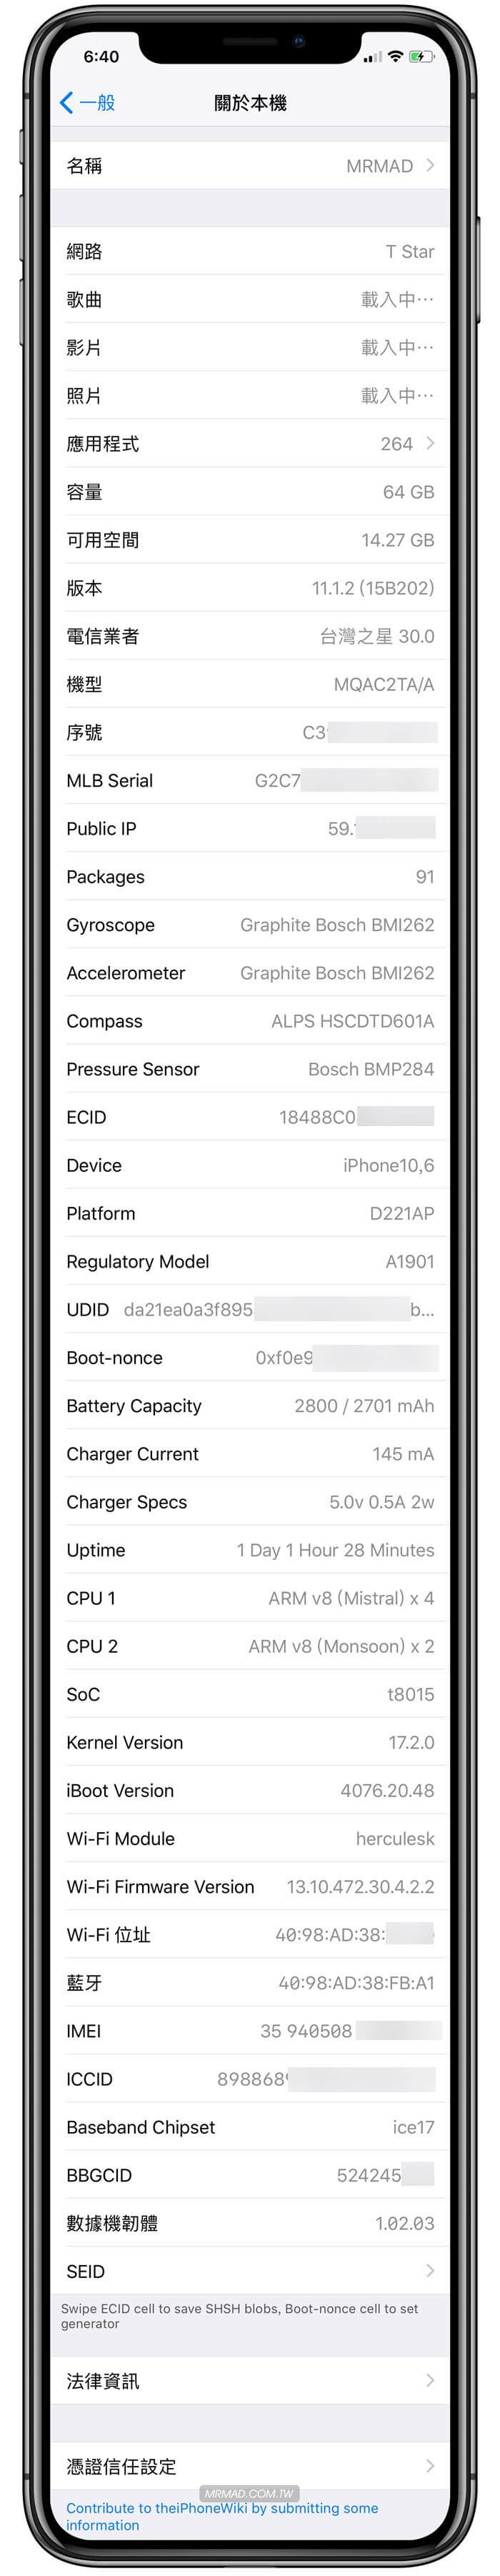 System Info 為你顯示 iOS 更多系統訊息！一鍵儲存SHSH2和調整解析度都沒問題